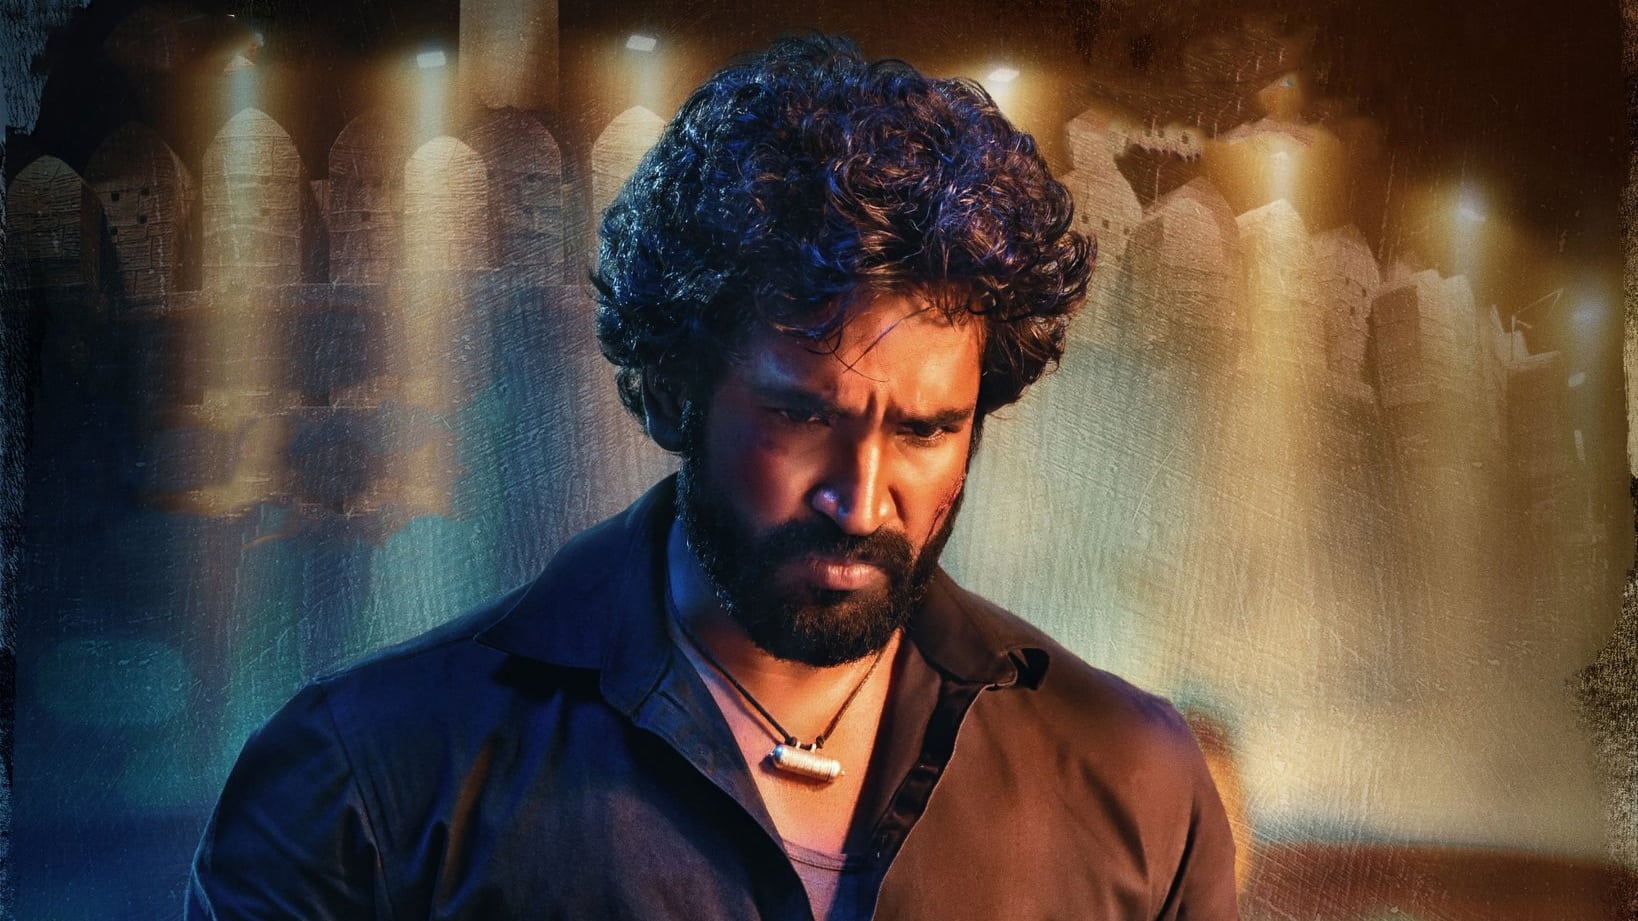 The Warriorr (2022) HQ PreDVD Tamil Full Movie Watch Online